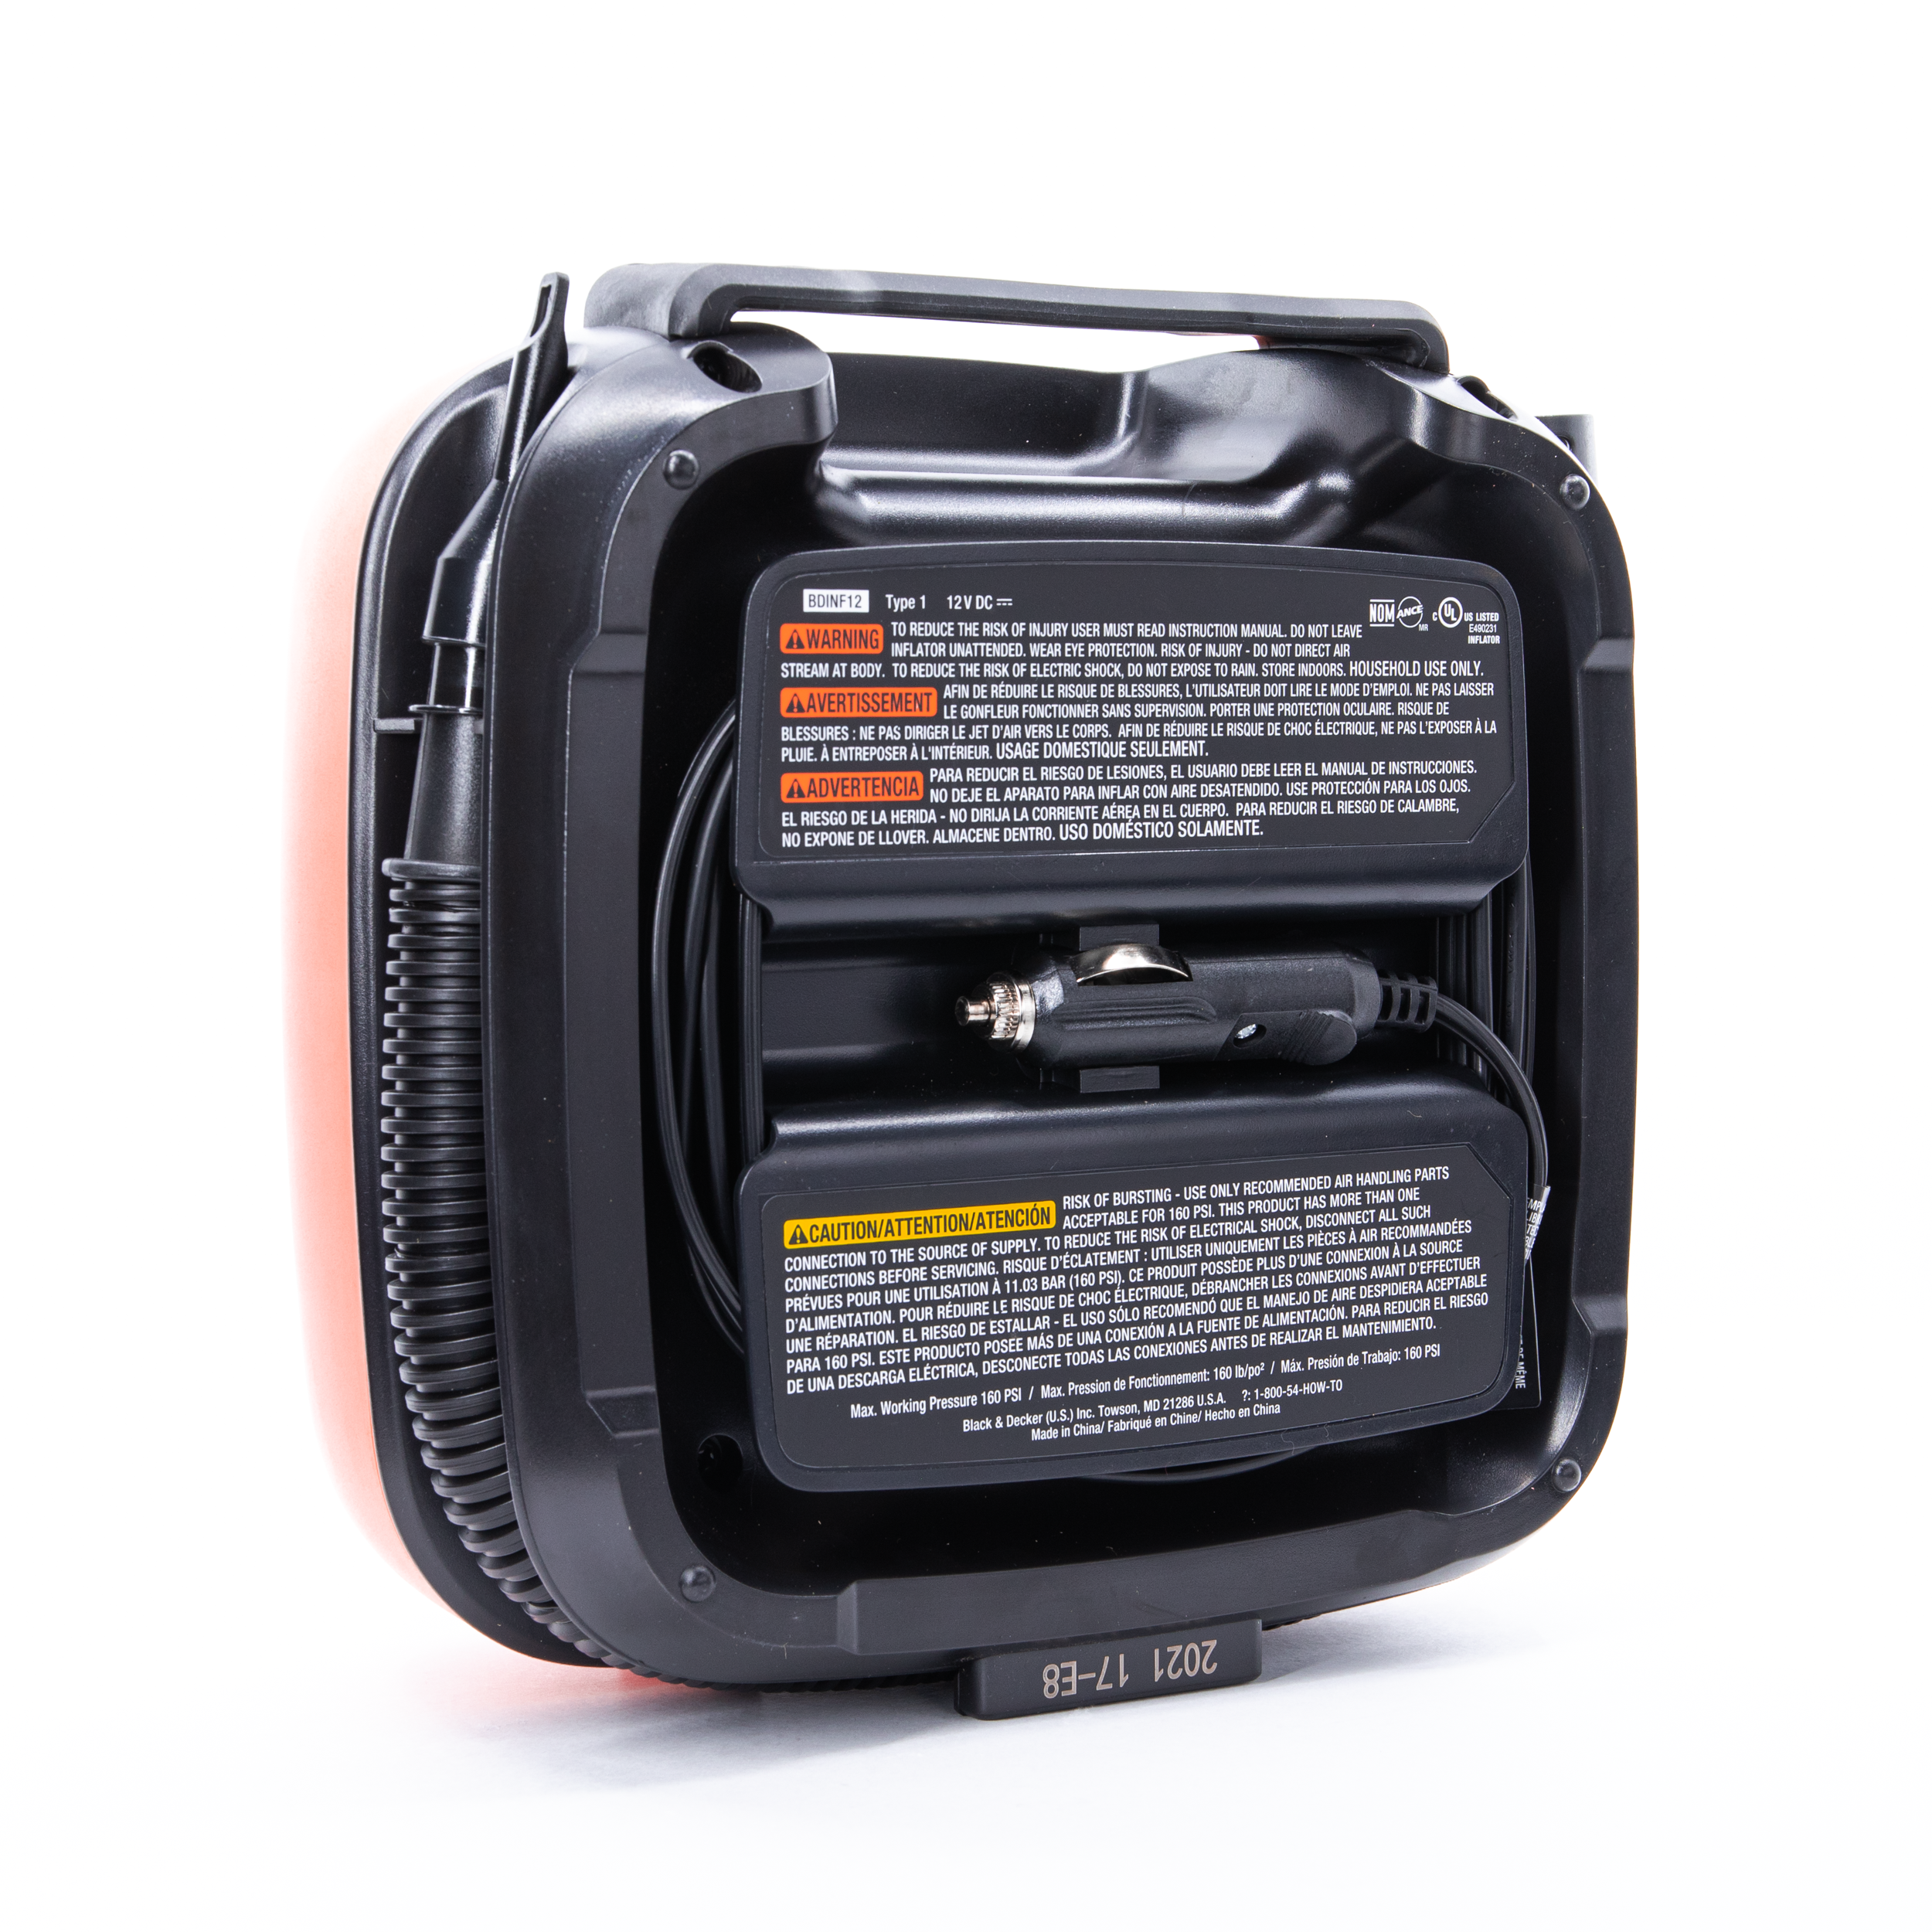 BLACK+DECKER BDINF12C Cordless Tire Inflator, Multi-purpose, Portable, 12V